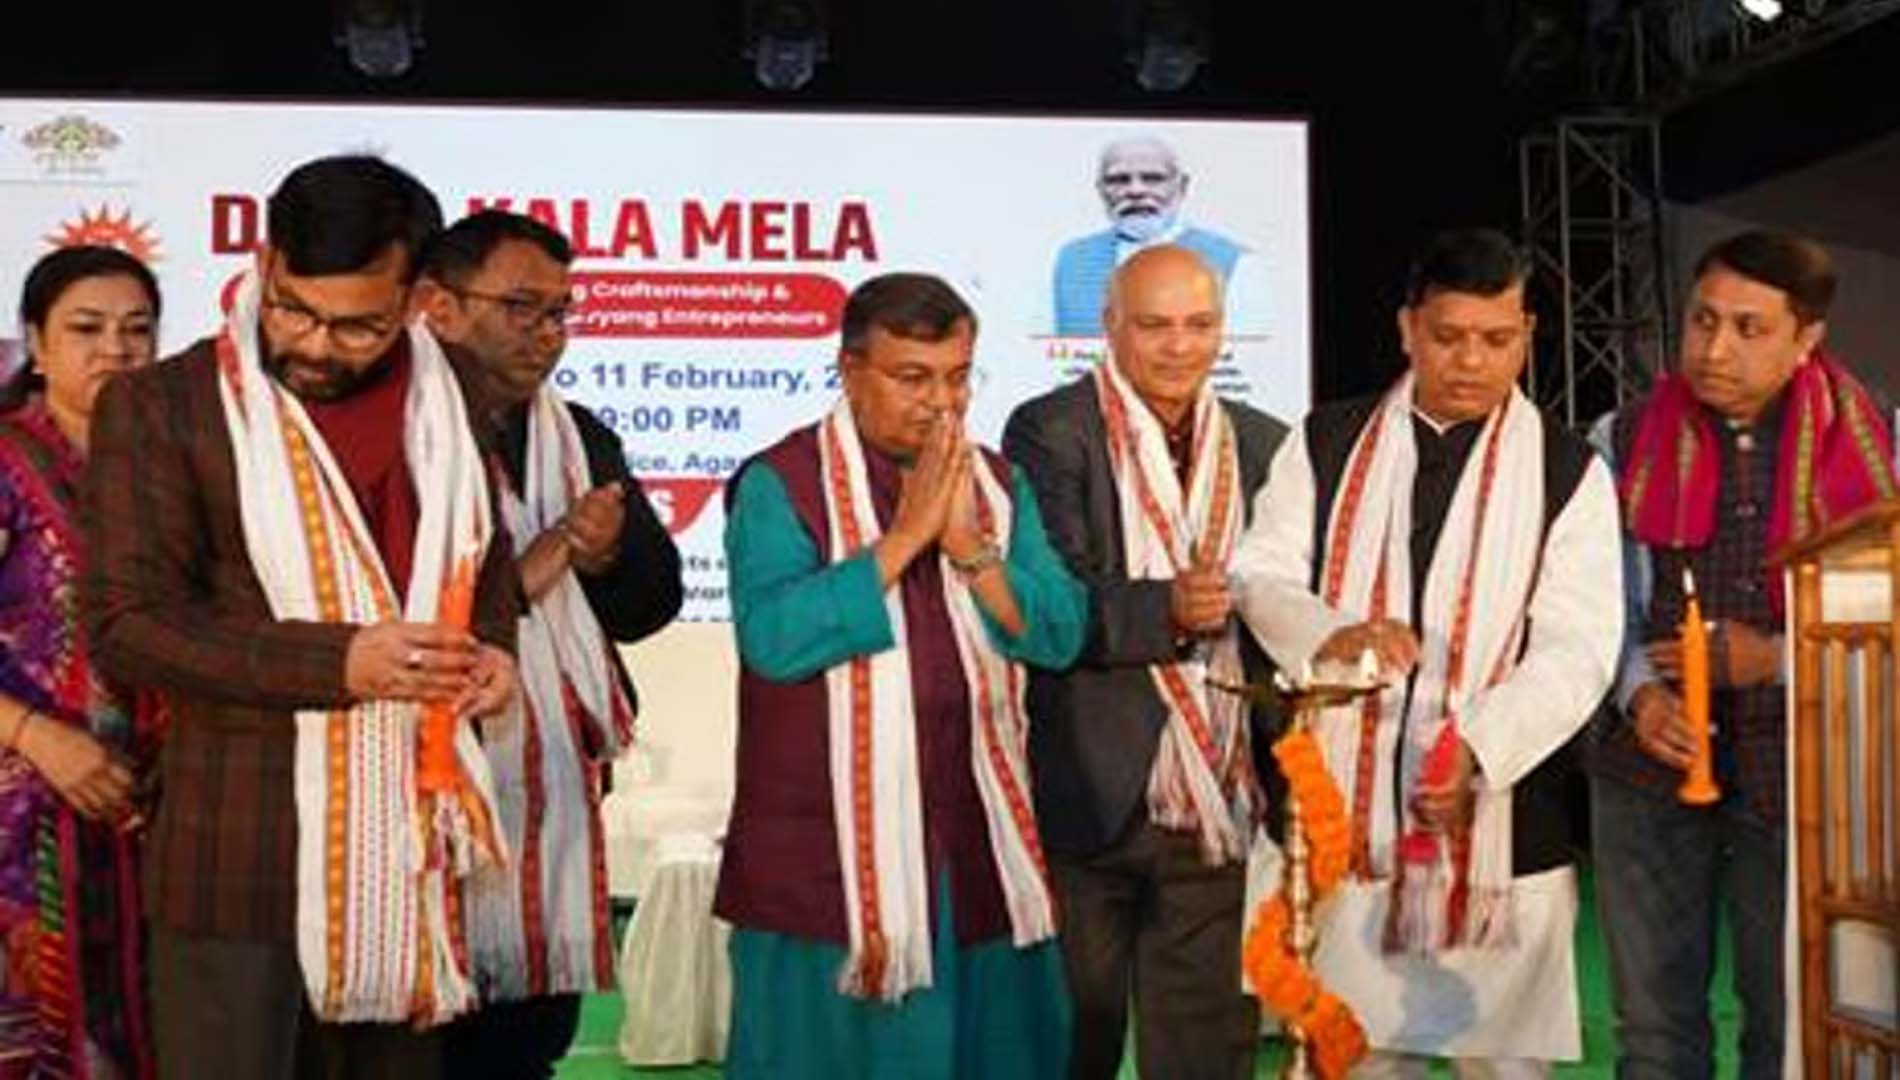 Divya Kala Mela inaugurated at Children’s Park in Agartala